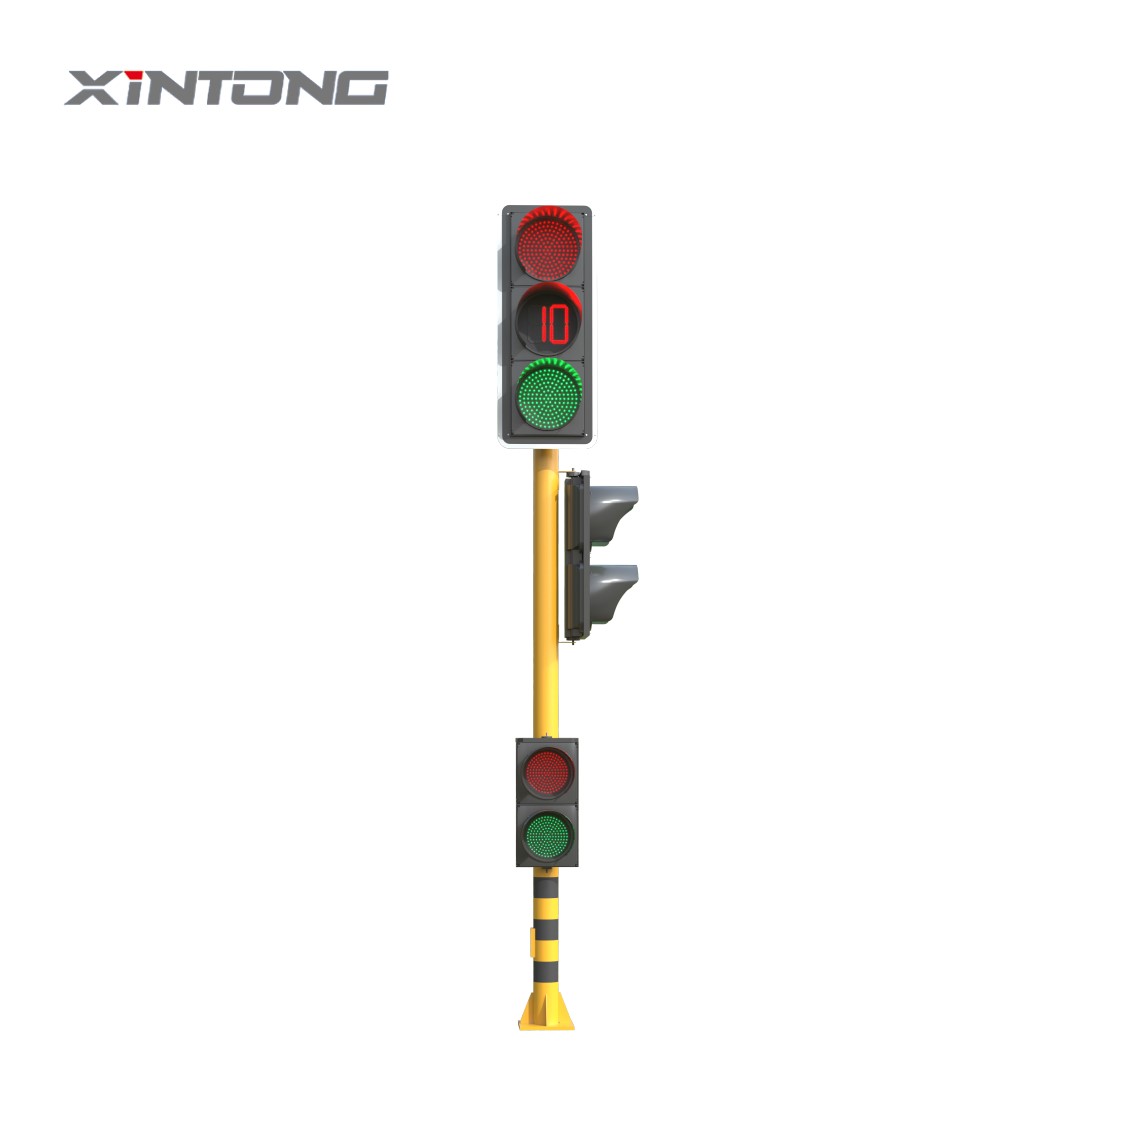 Xintong 300LED traffic crossroad signal light 1